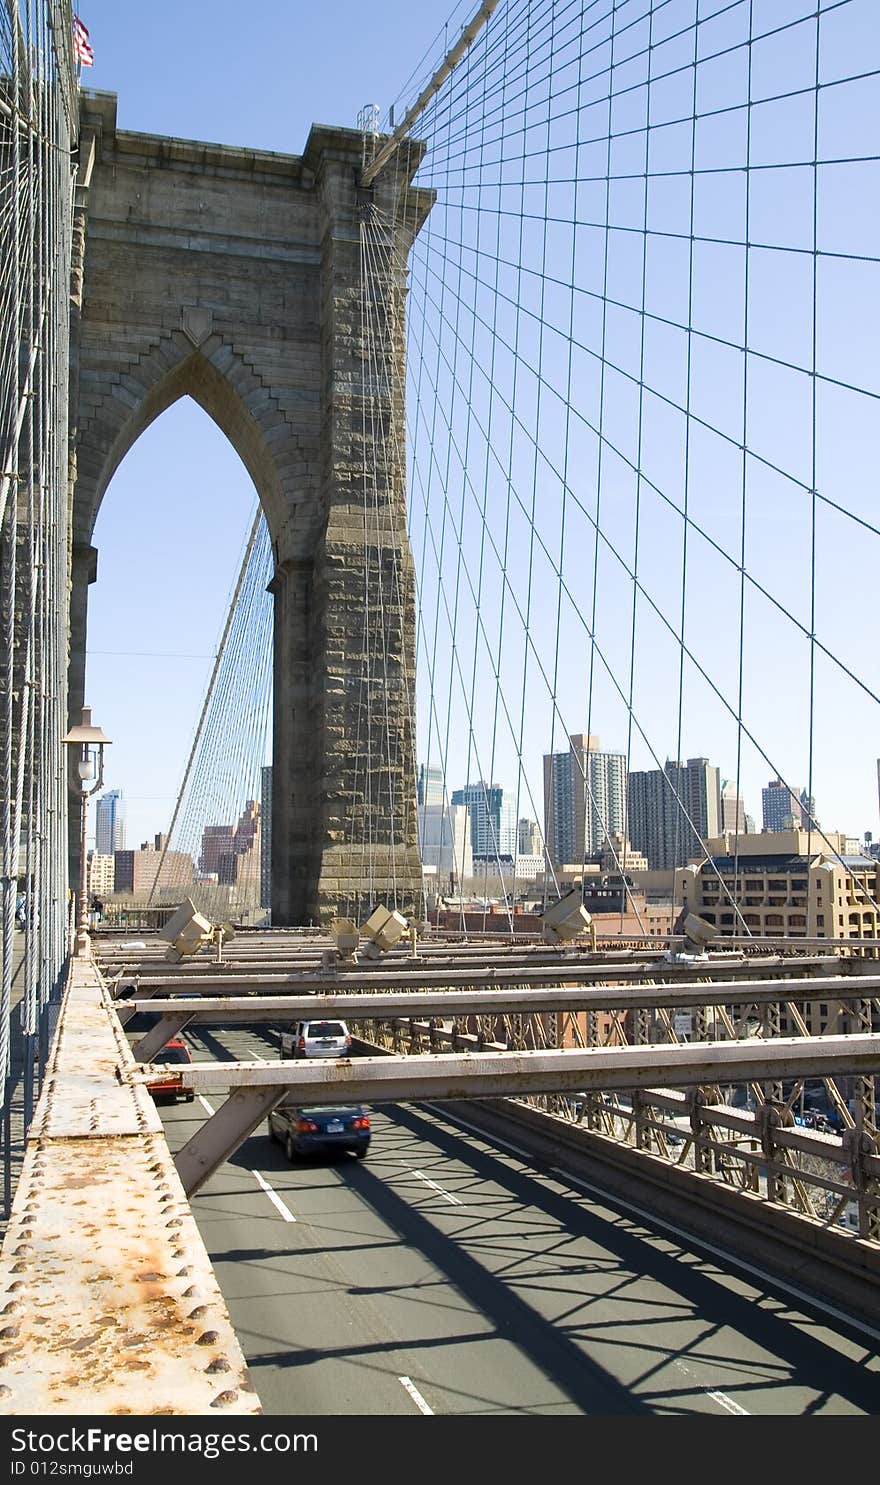 View of the Brooklyn Bridge